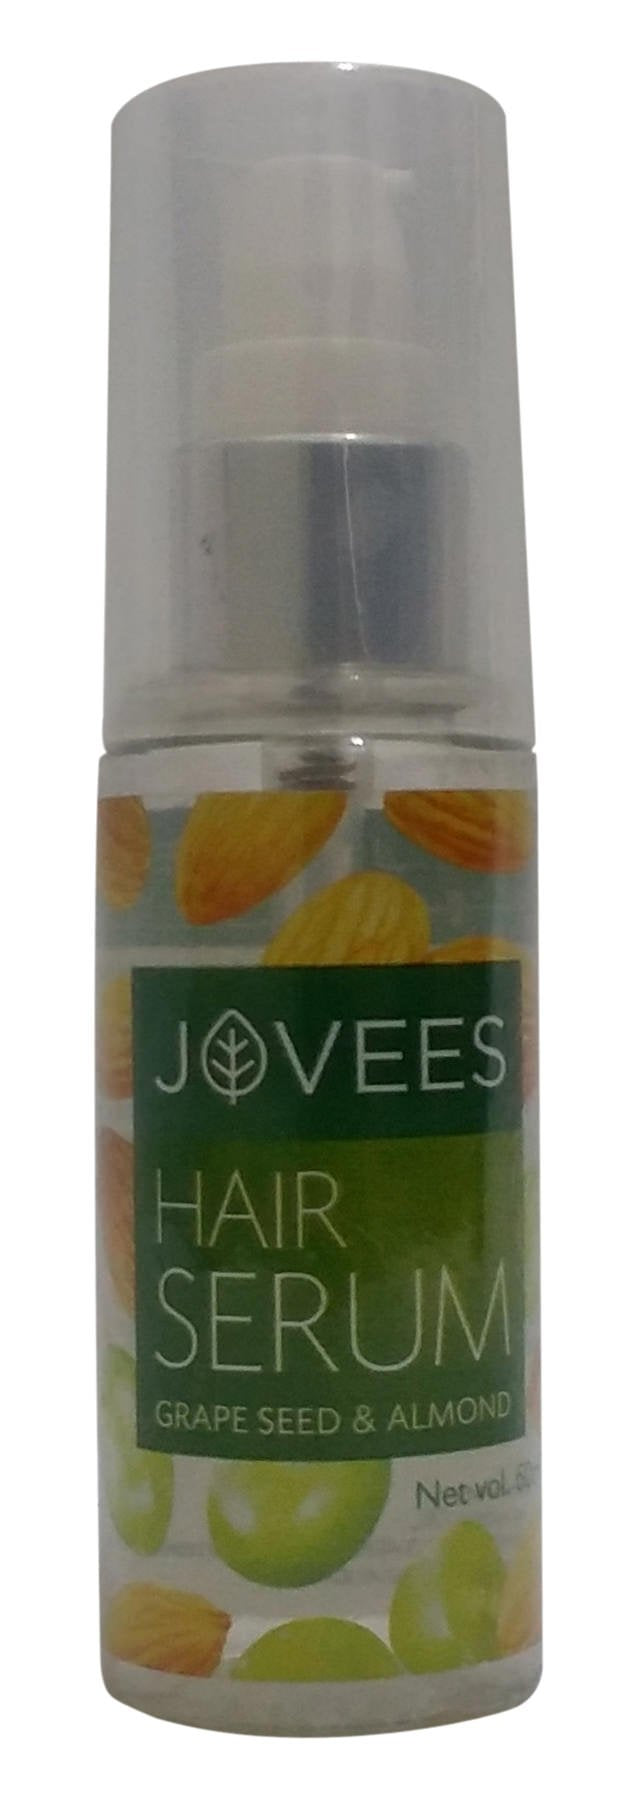 Jovees Hair Serum - Grape Seed and Almond, 60ml Bottle